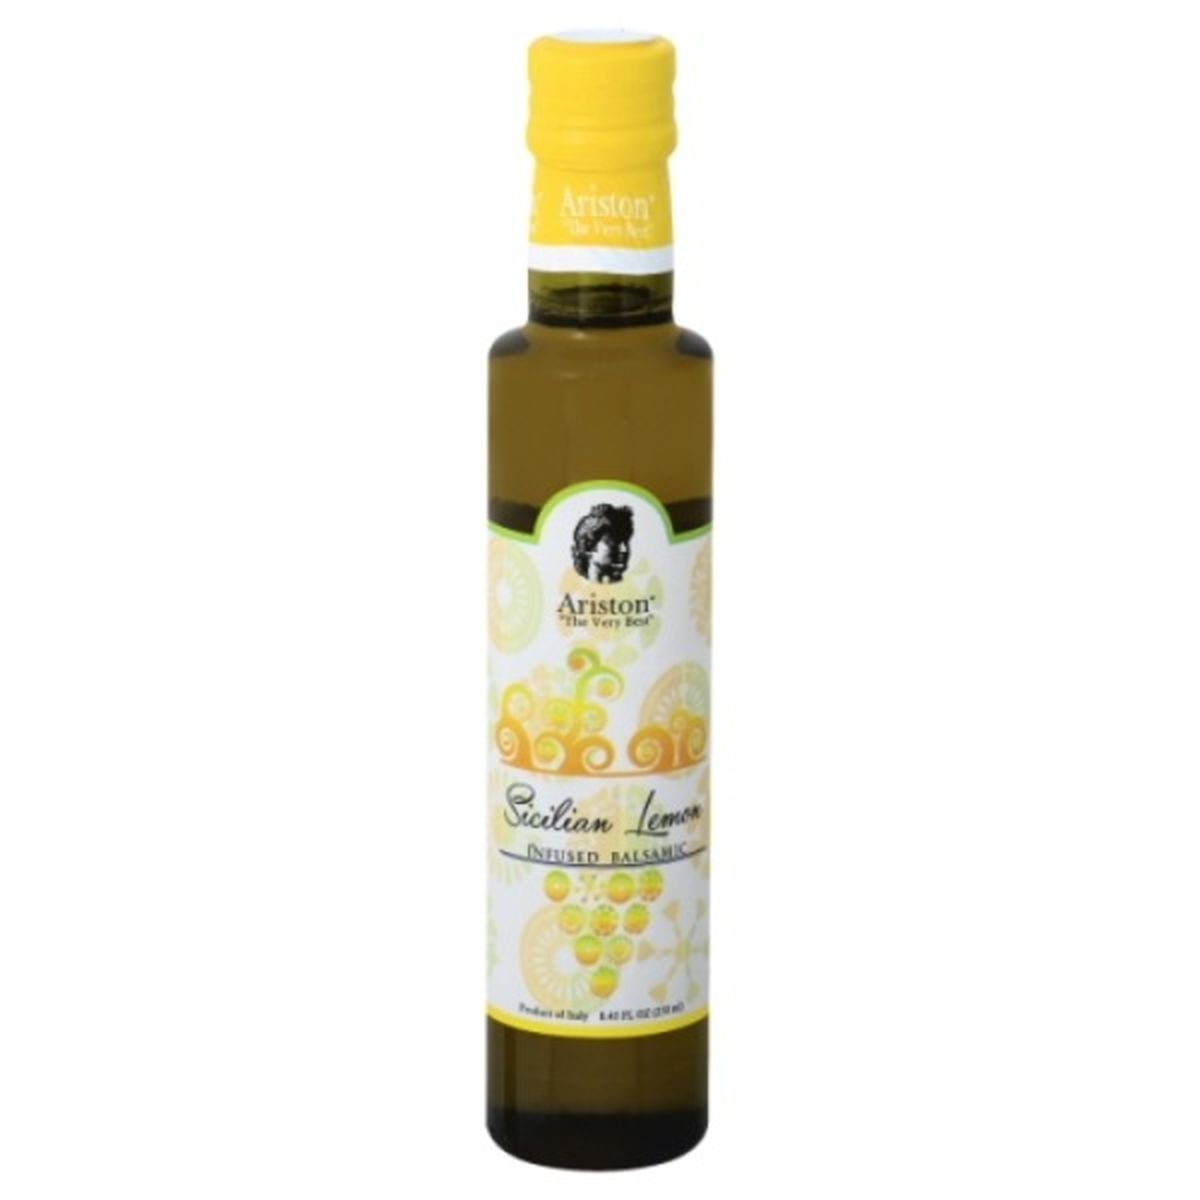 Calories in Ariston Balsamic, Sicilian Lemon, Infused